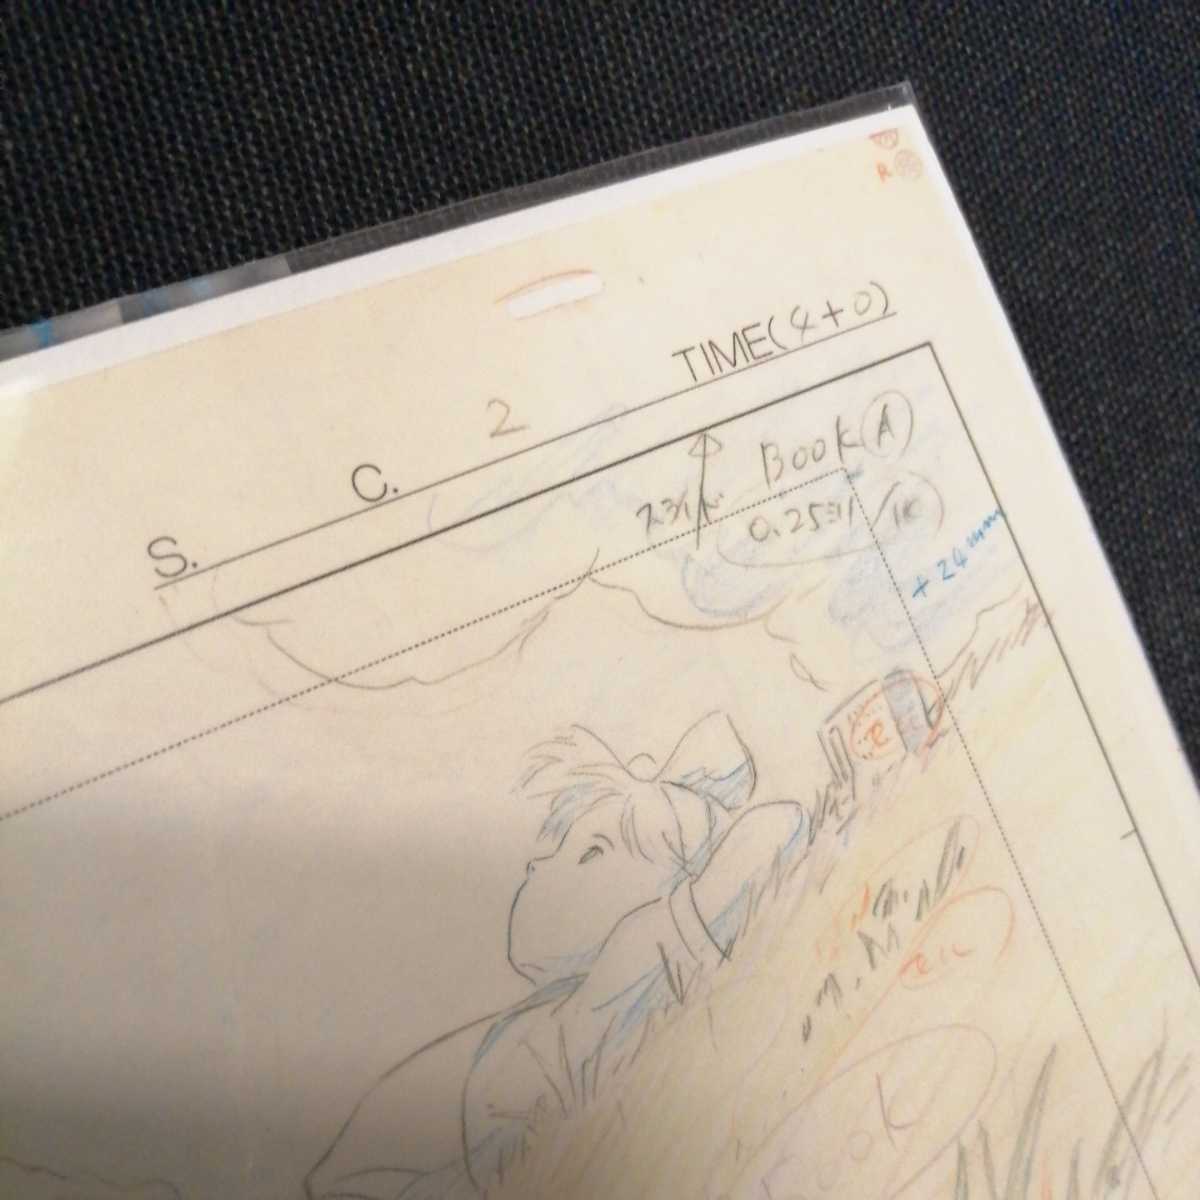  Studio Ghibli Majo no Takkyubin расположение порез . осмотр ) Ghibli открытка постер исходная картина цифровая картинка расположение выставка Miyazaki .